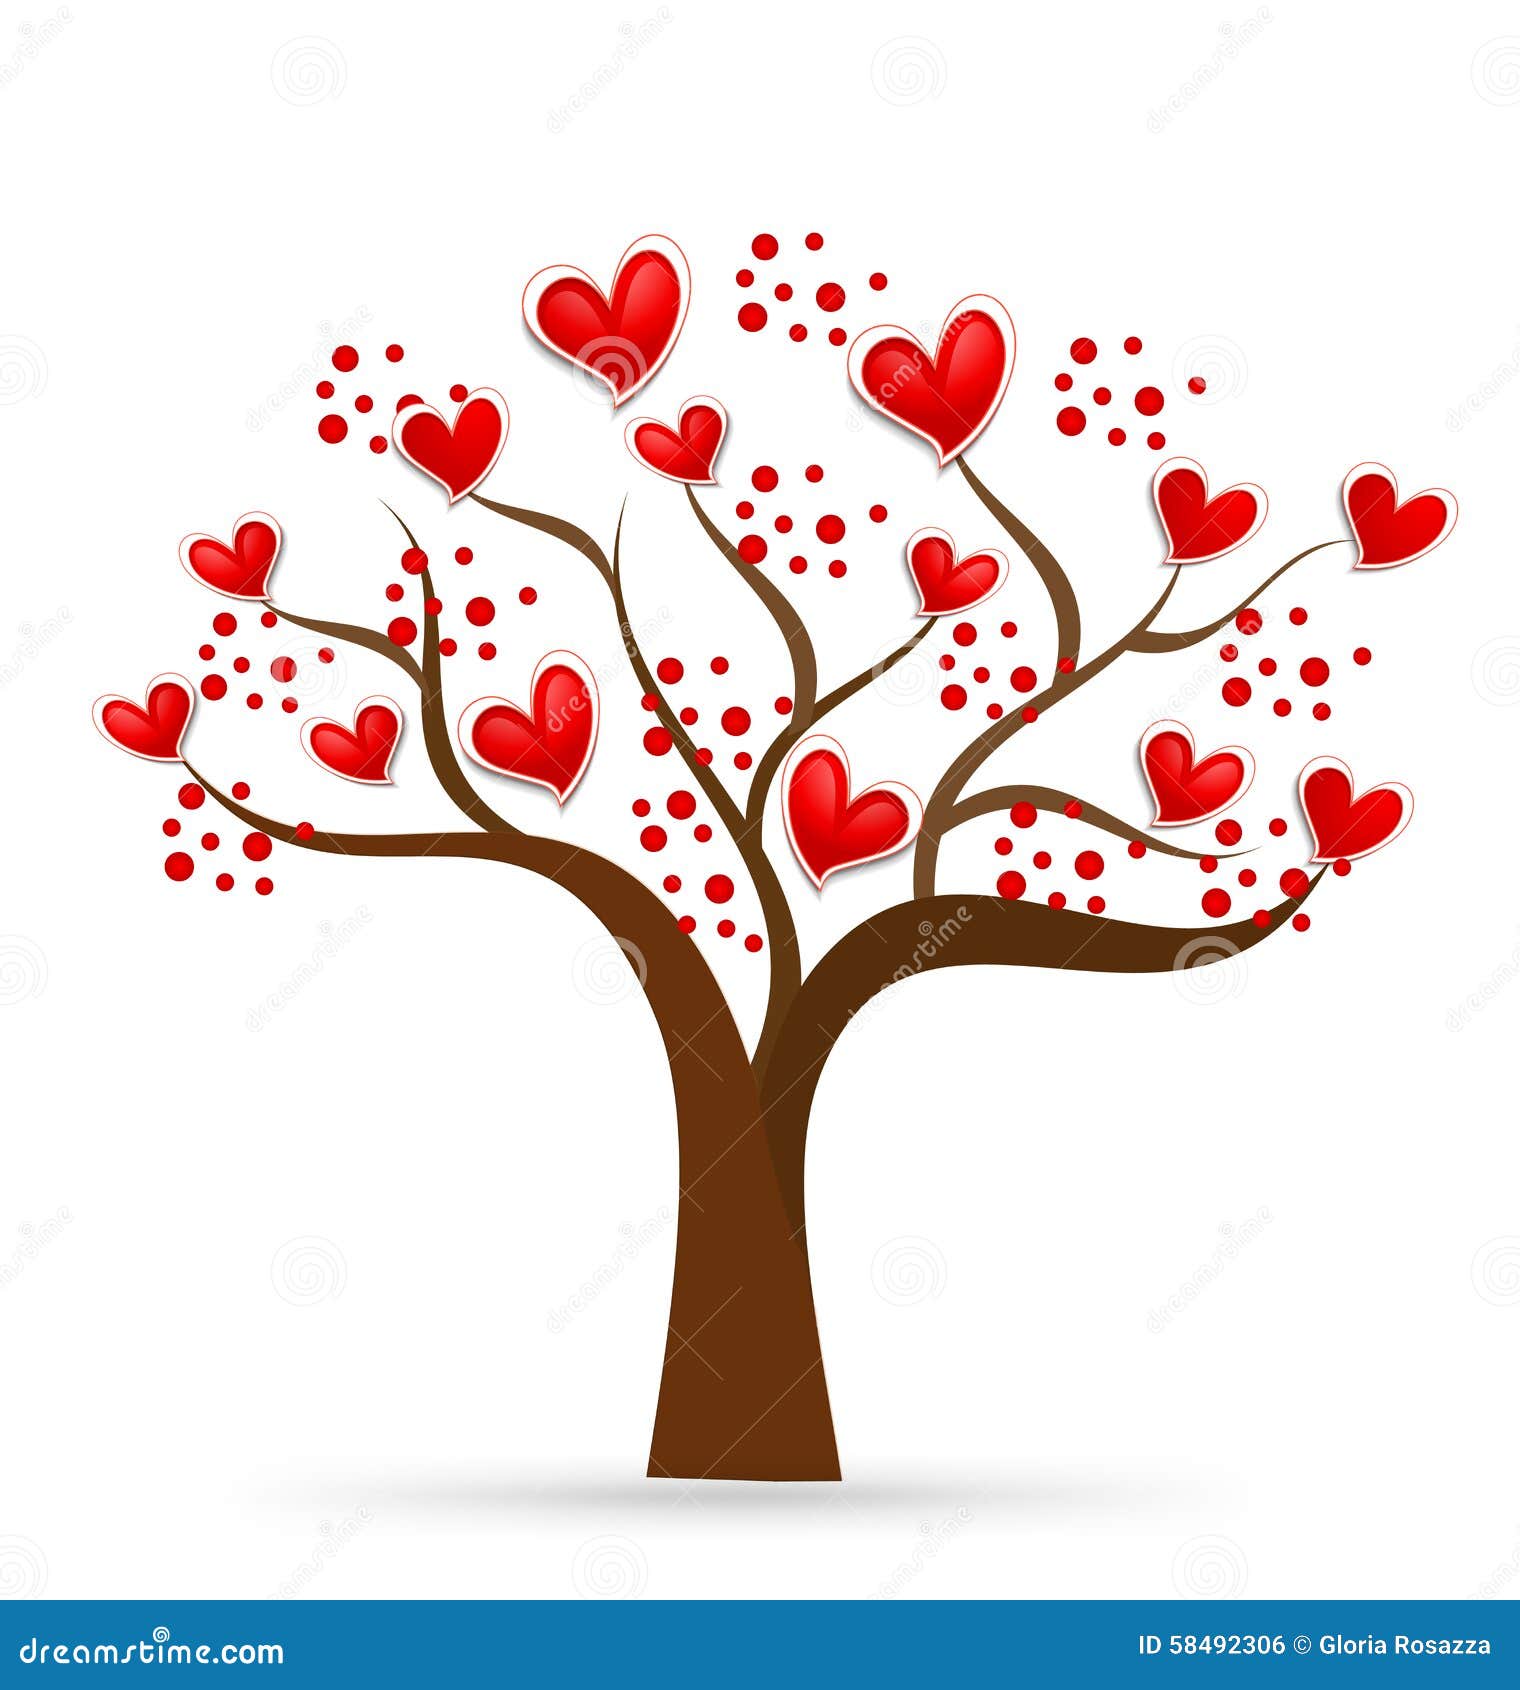 Tree Of Love Valentines Hearts Logo Stock Vector - Image: 58492306